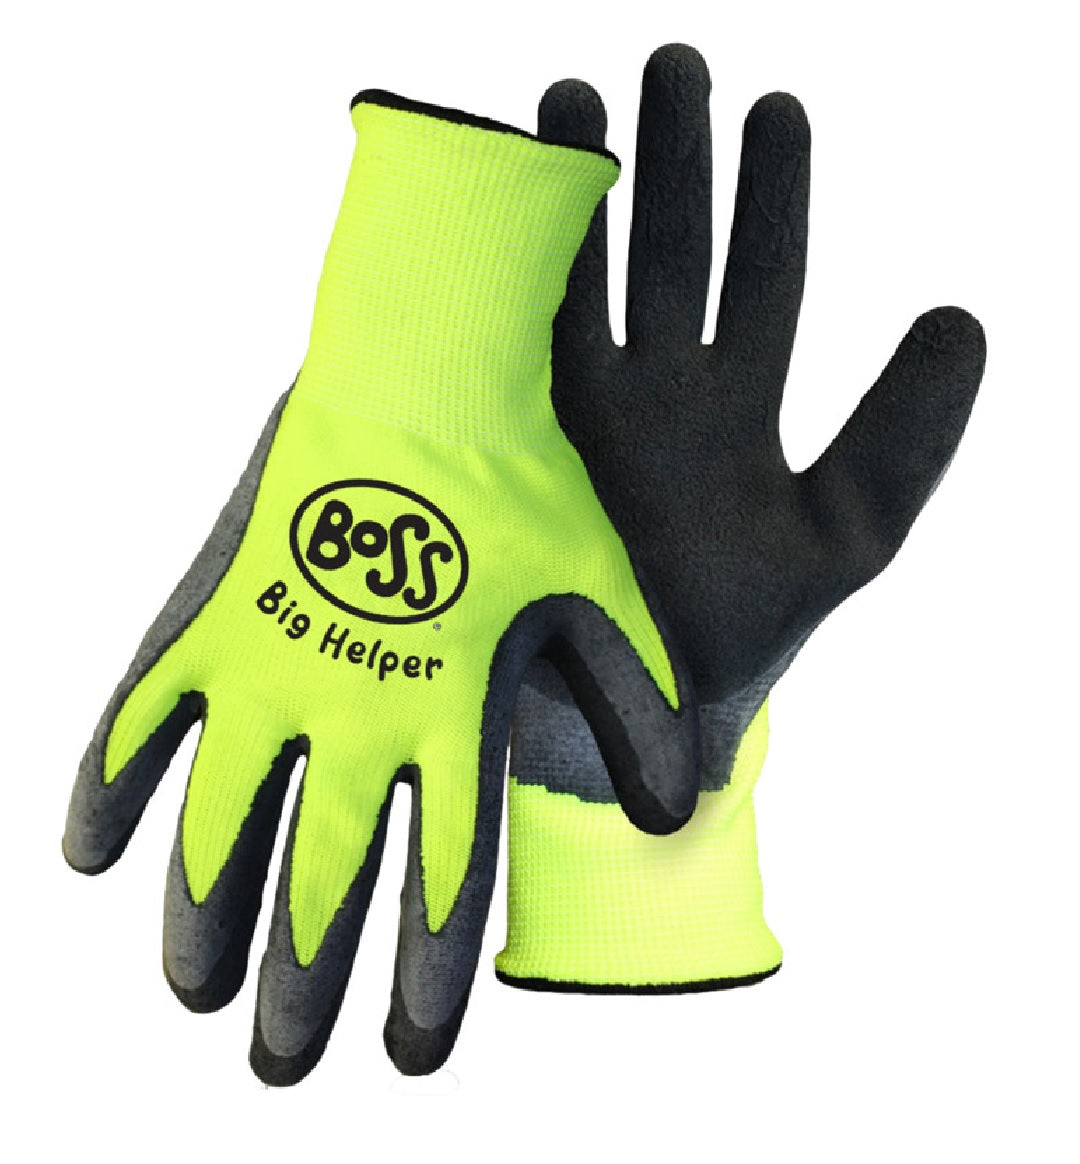 BOSS® 8412K Work Gloves, Age 9 - 12, Polyester, Black/Hi-Viz Yellow, Knit Wrist Cuff